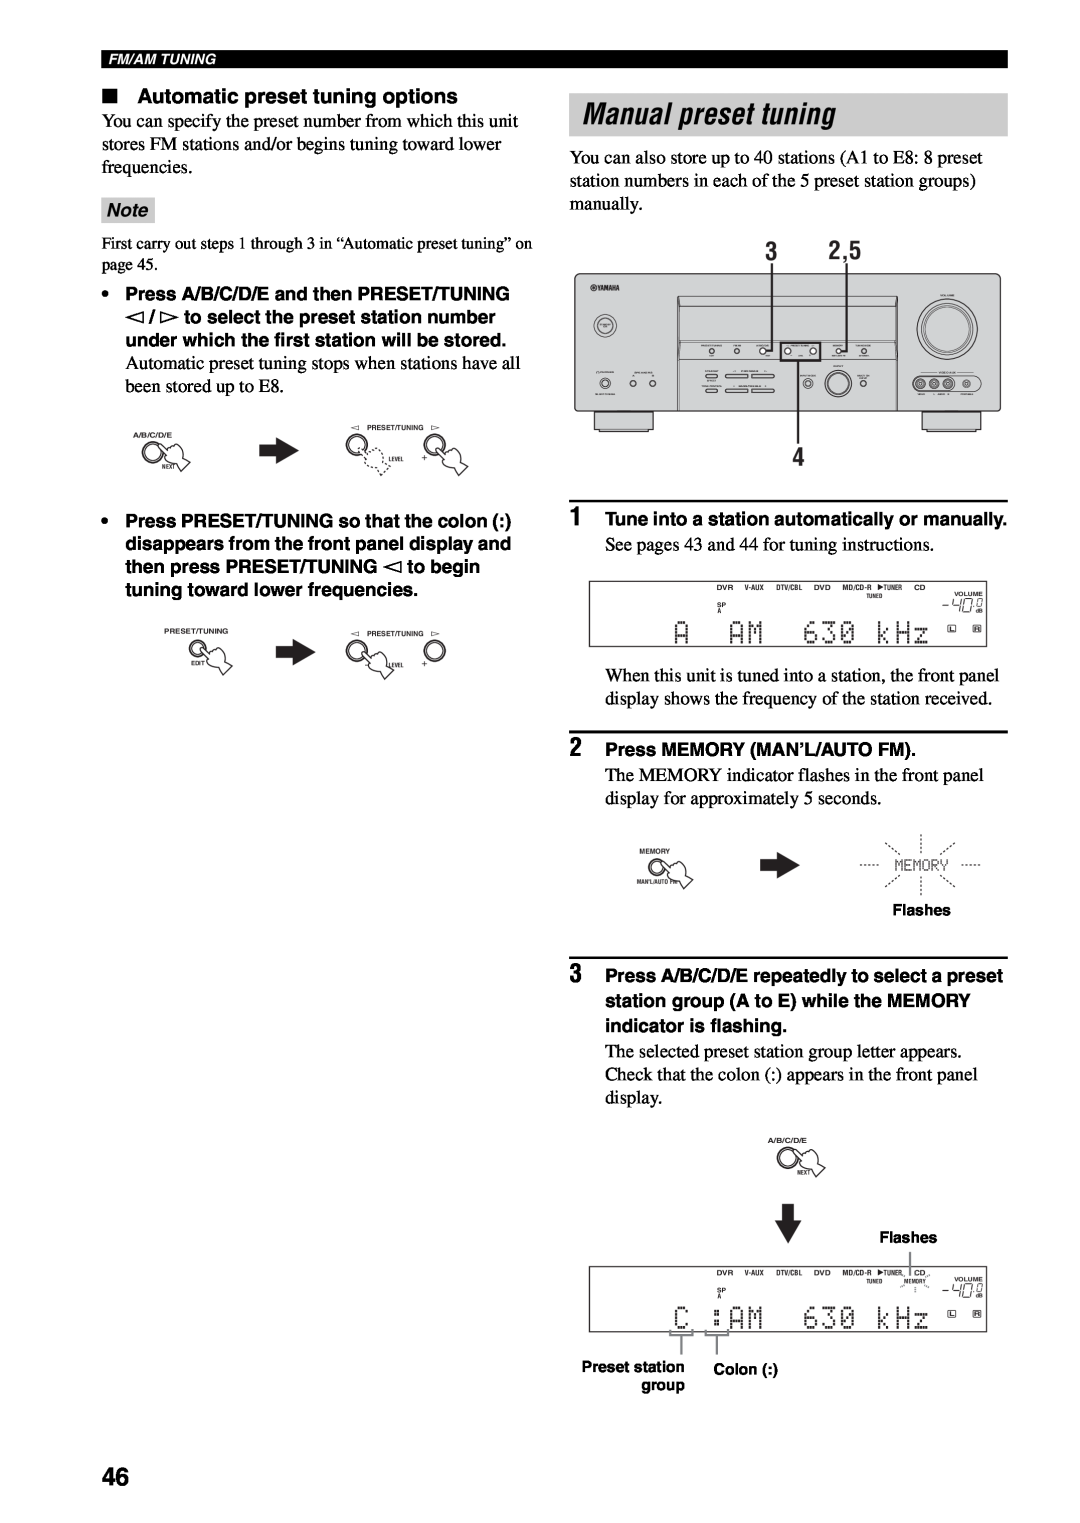 Yamaha RX-V459 owner manual Manual preset tuning, A AM 630 kHz, Automatic preset tuning options 